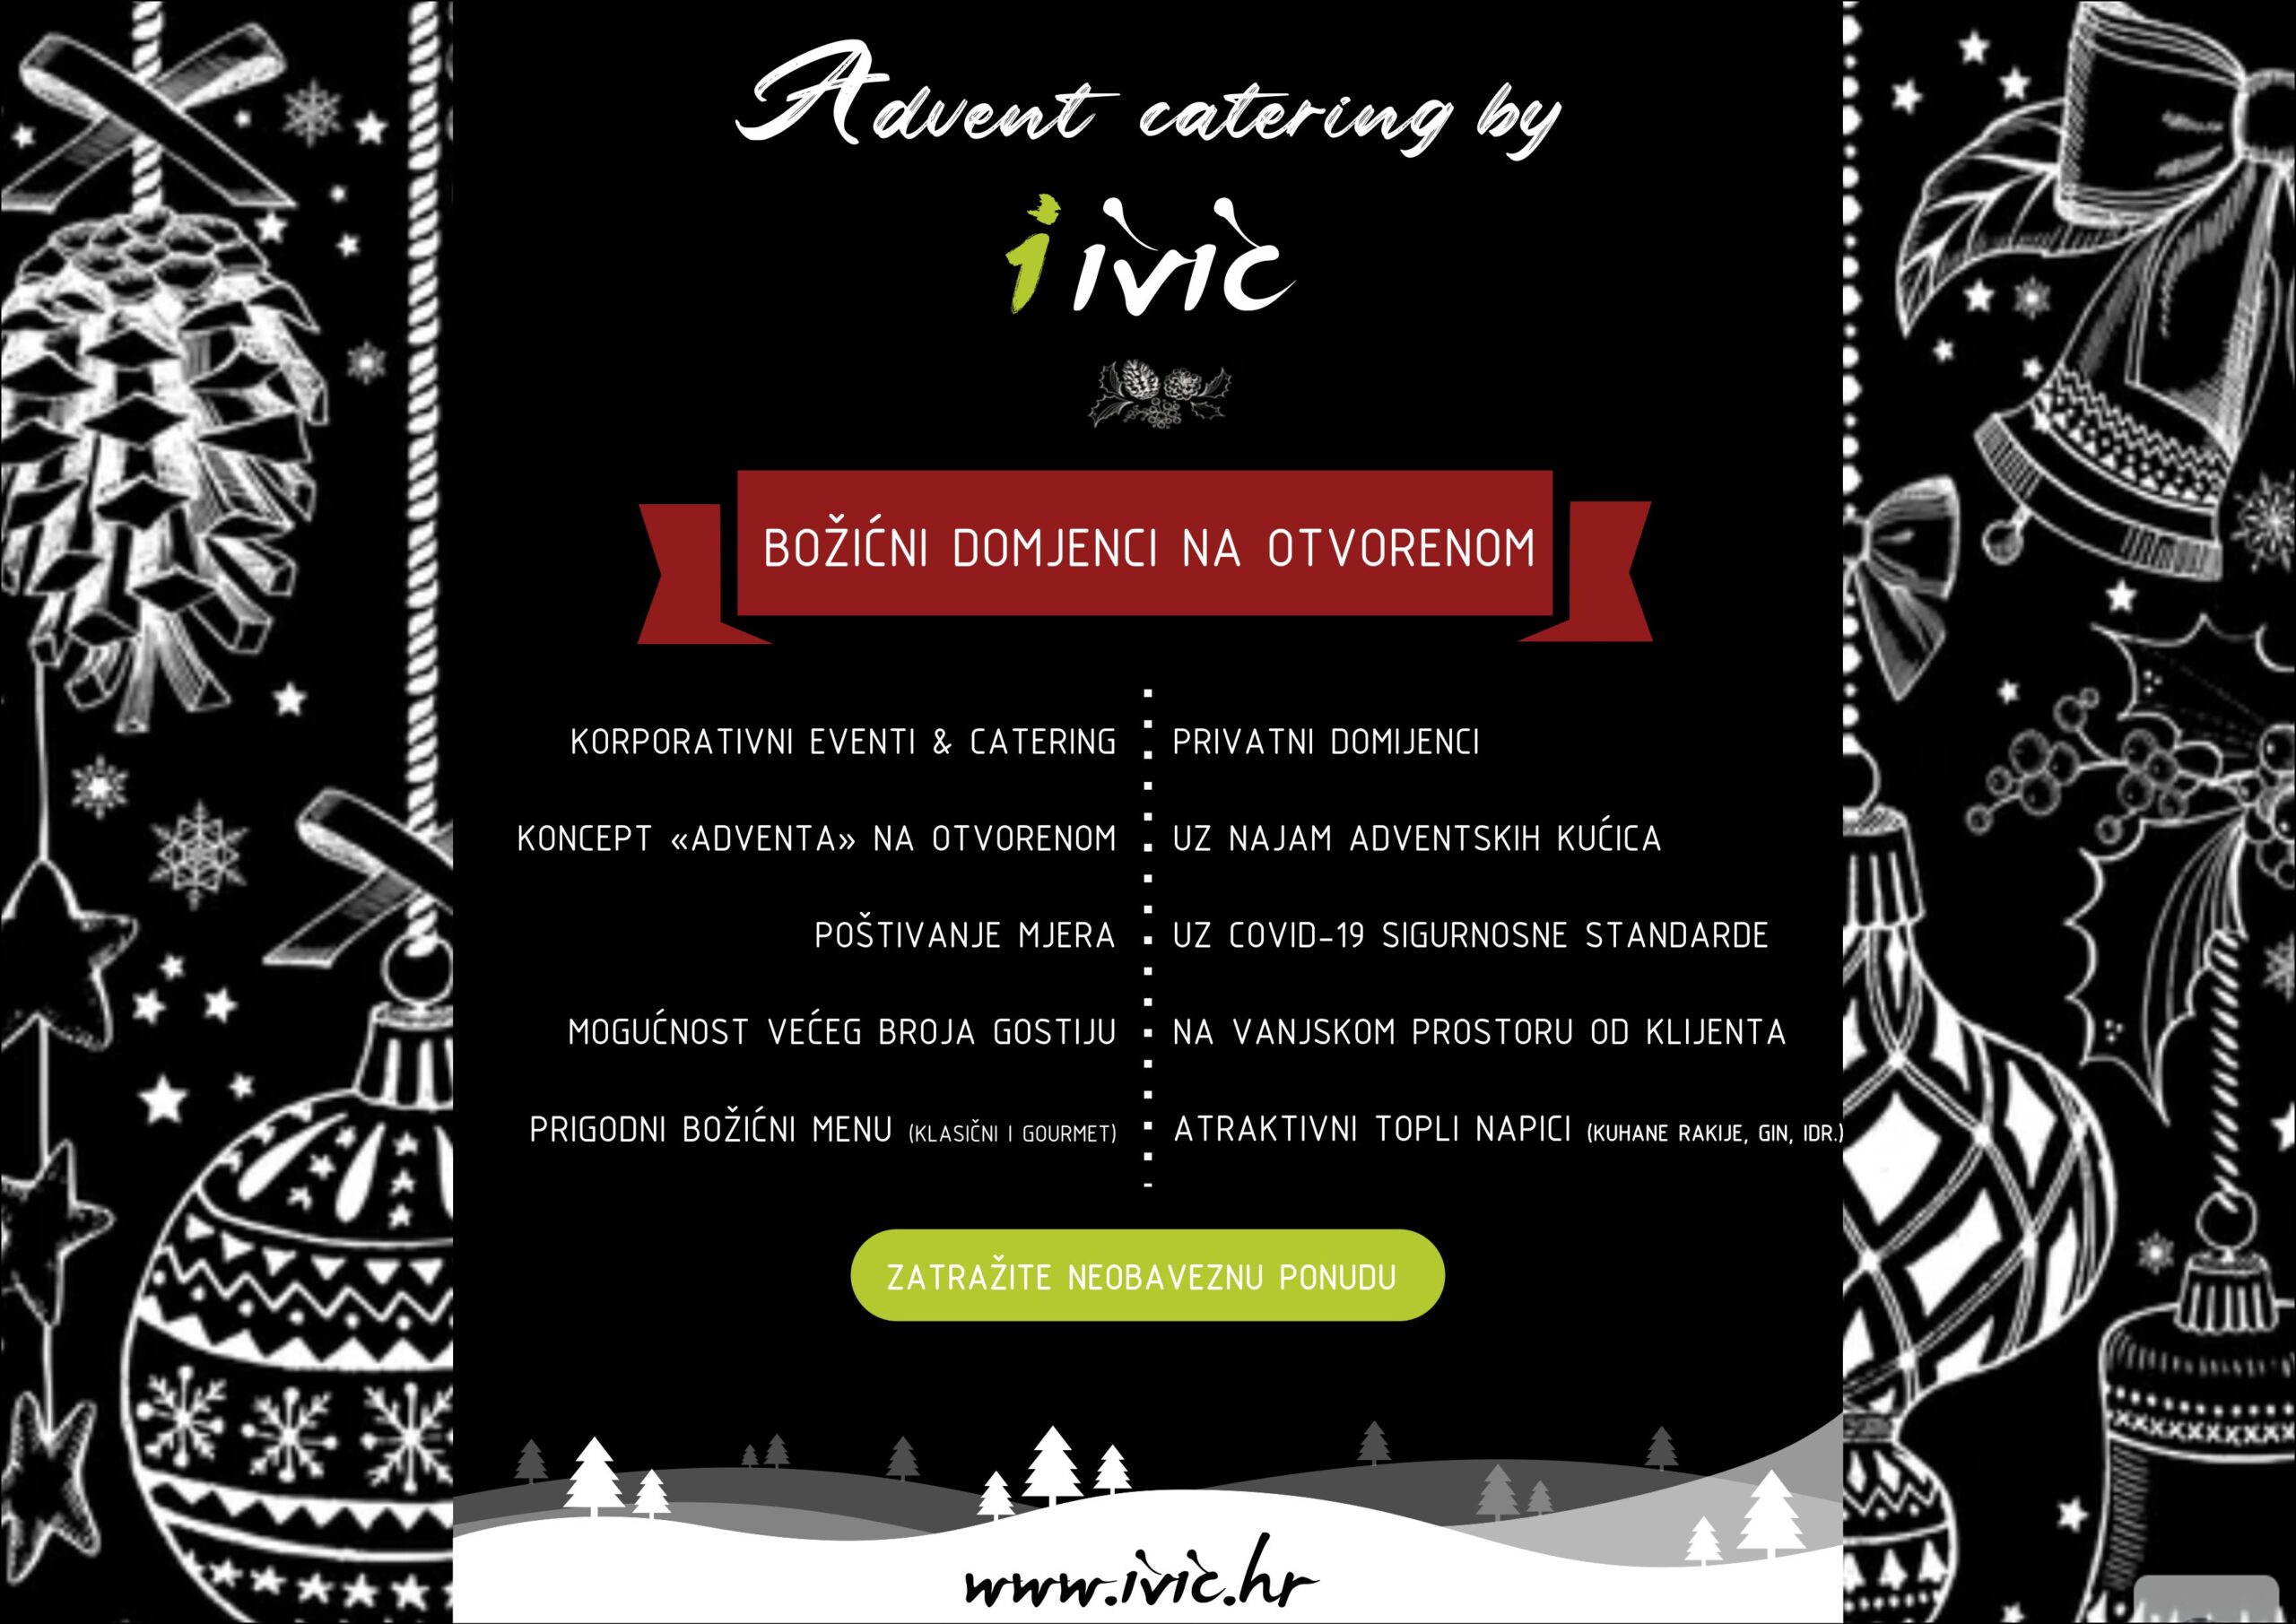 Božićni domjenak na otvorenom Advent catering by Ivić